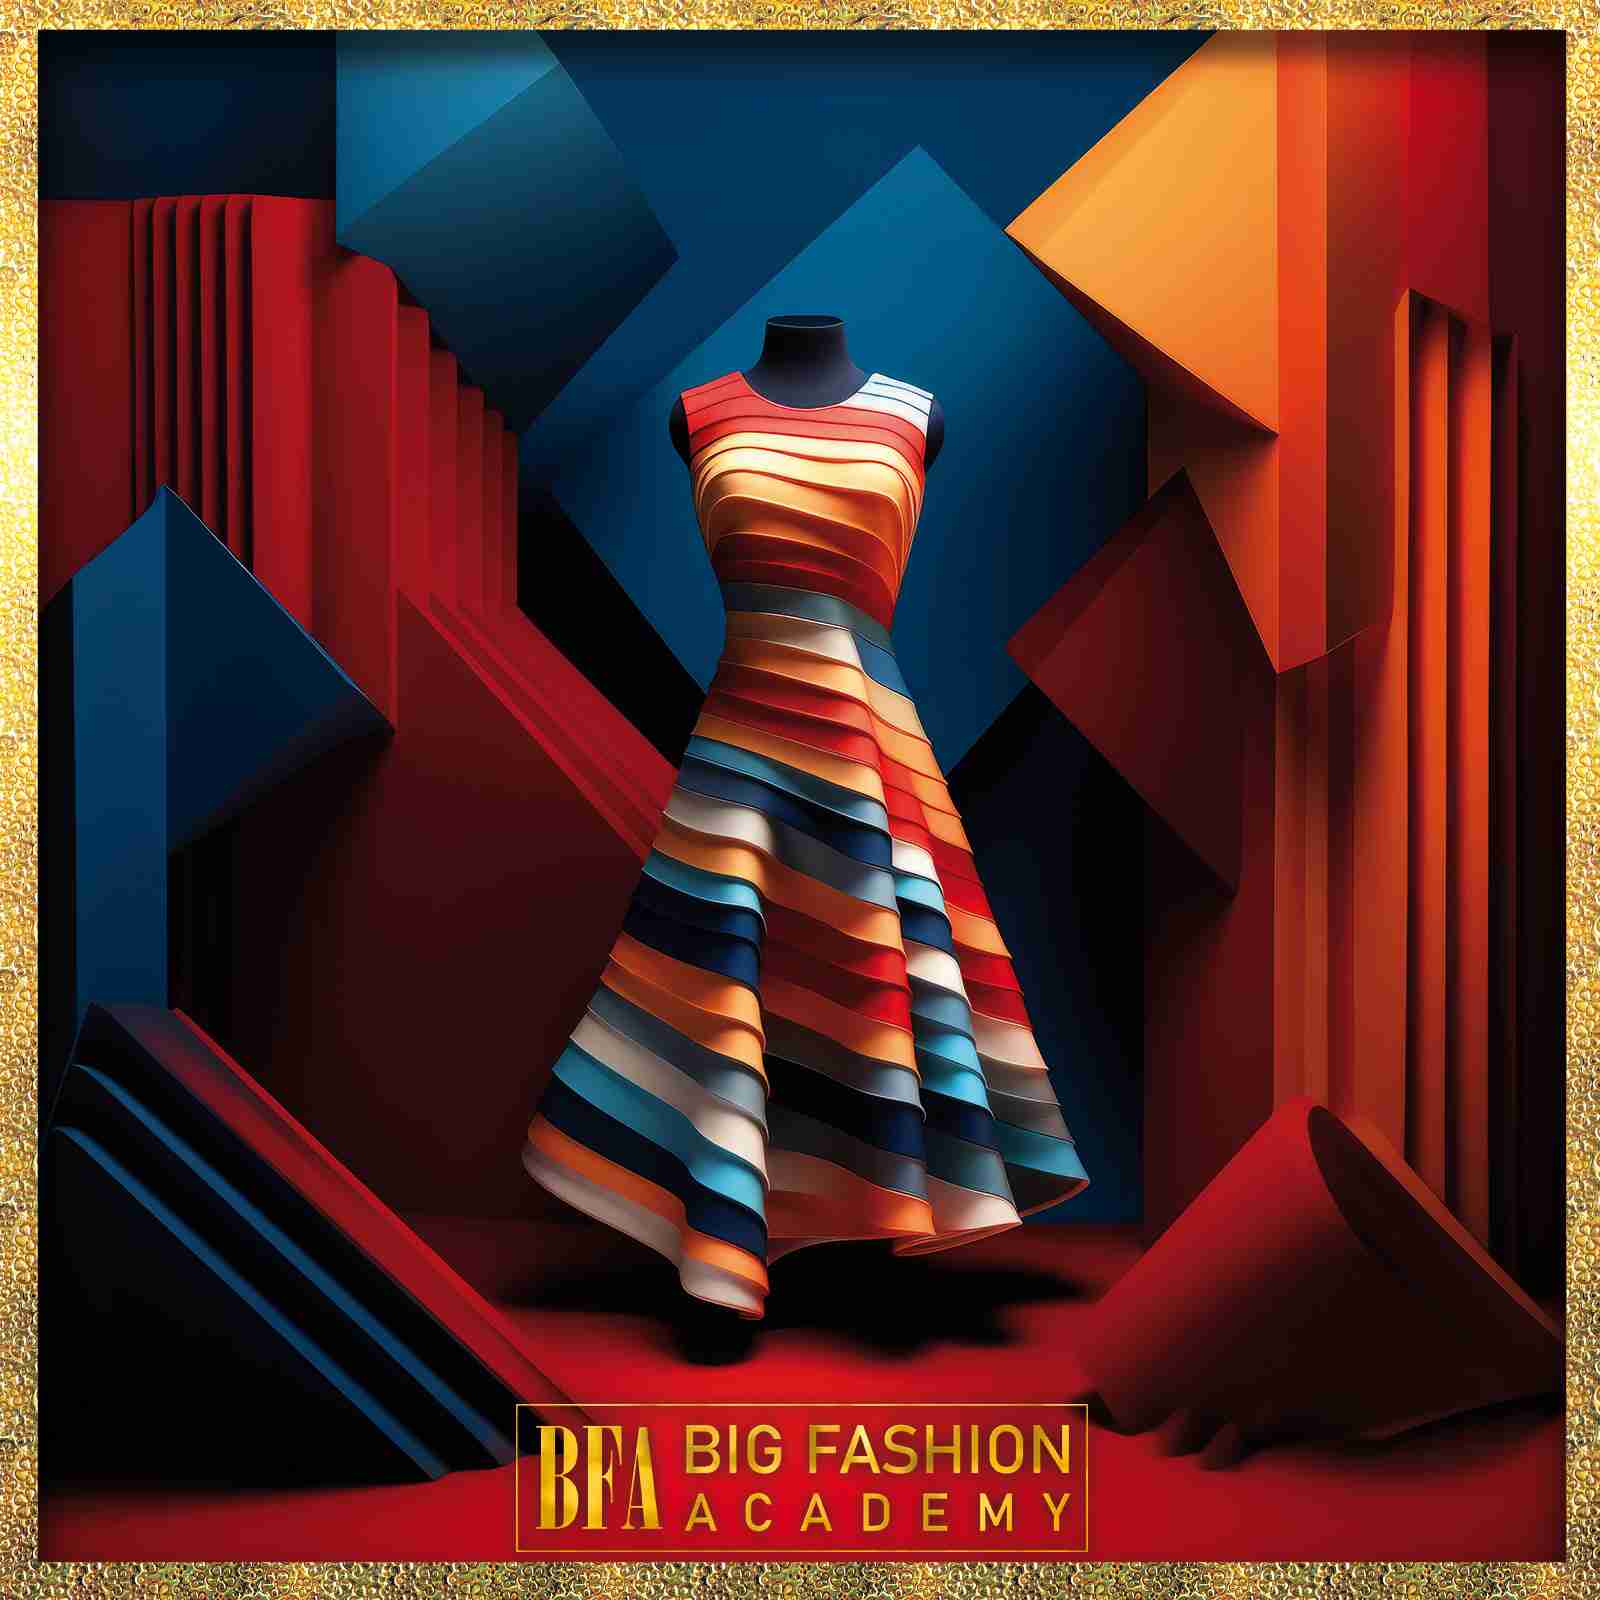 BFashion presents India's leading courses in Fashion Design